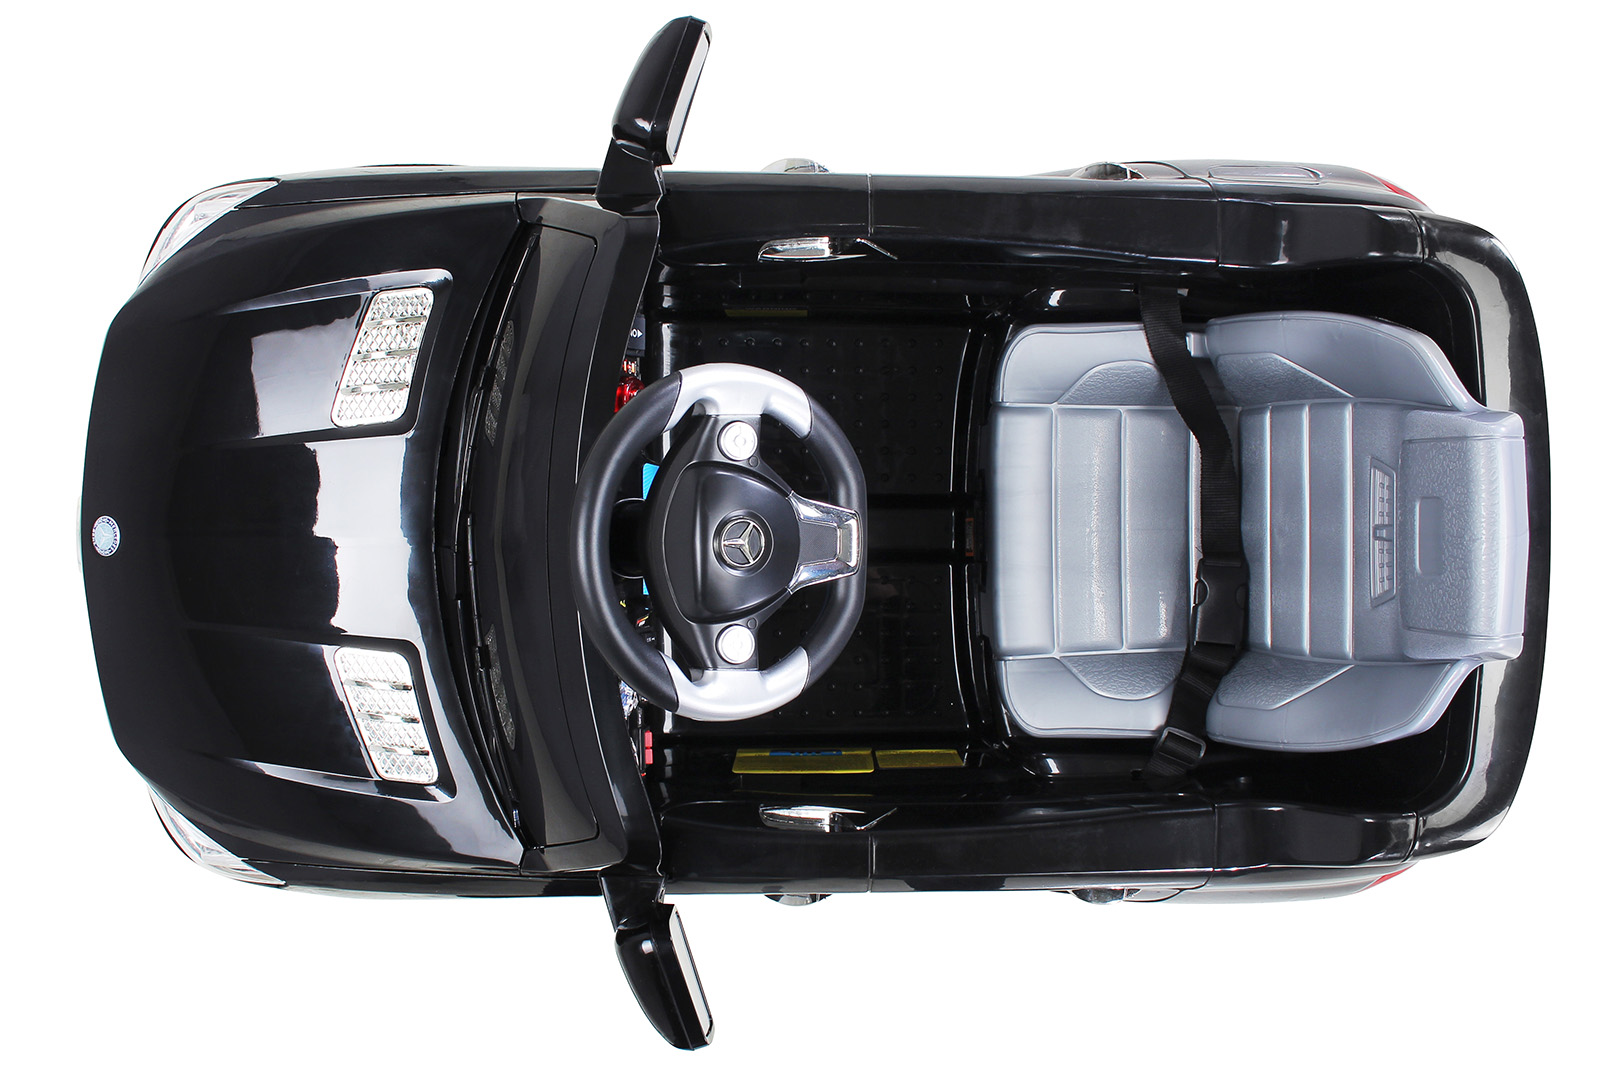 350 Mercedes-Benz ACTIONBIKES ML MOTORS Lizenziert Elektroauto